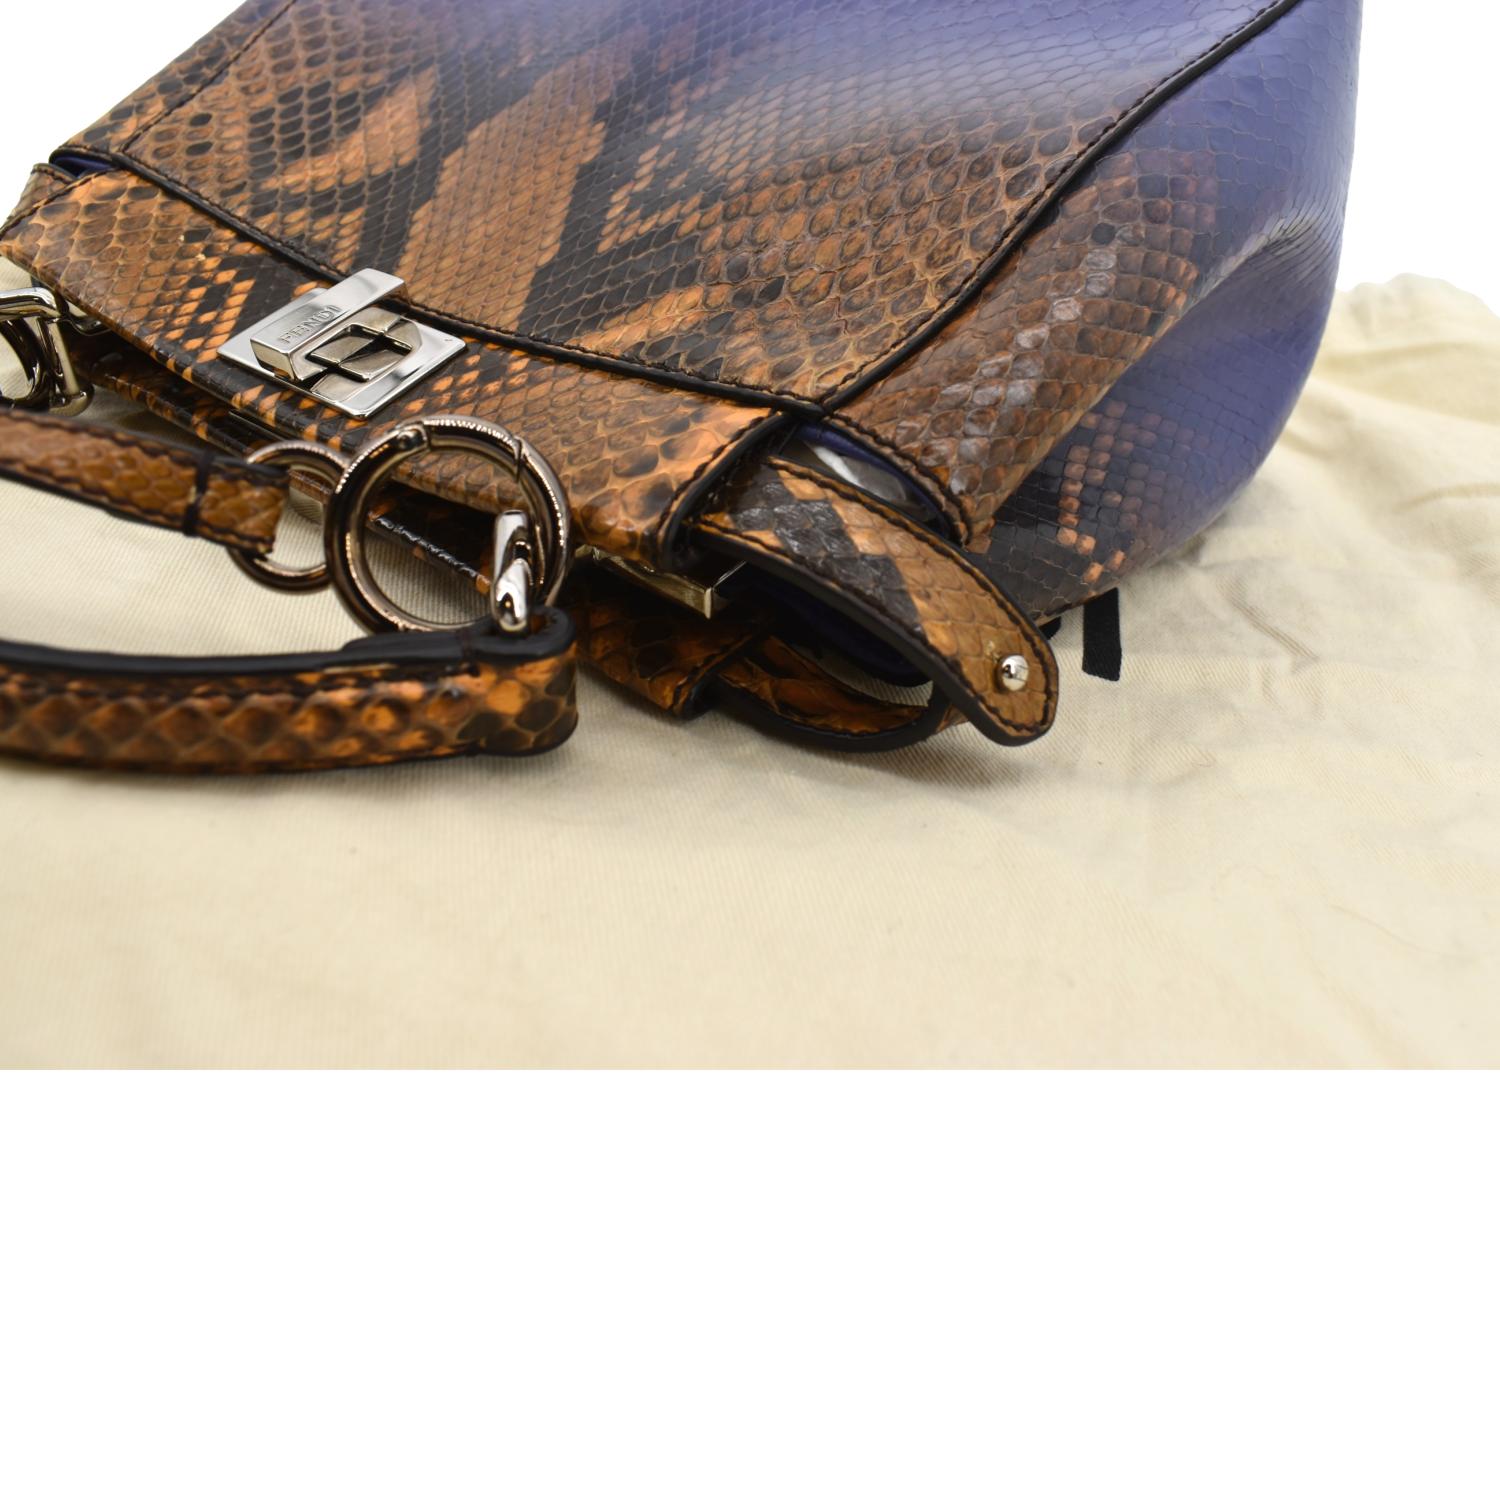 Fendi Brown/Purple Ombre Python Mini Peekaboo Top Handle Bag Fendi